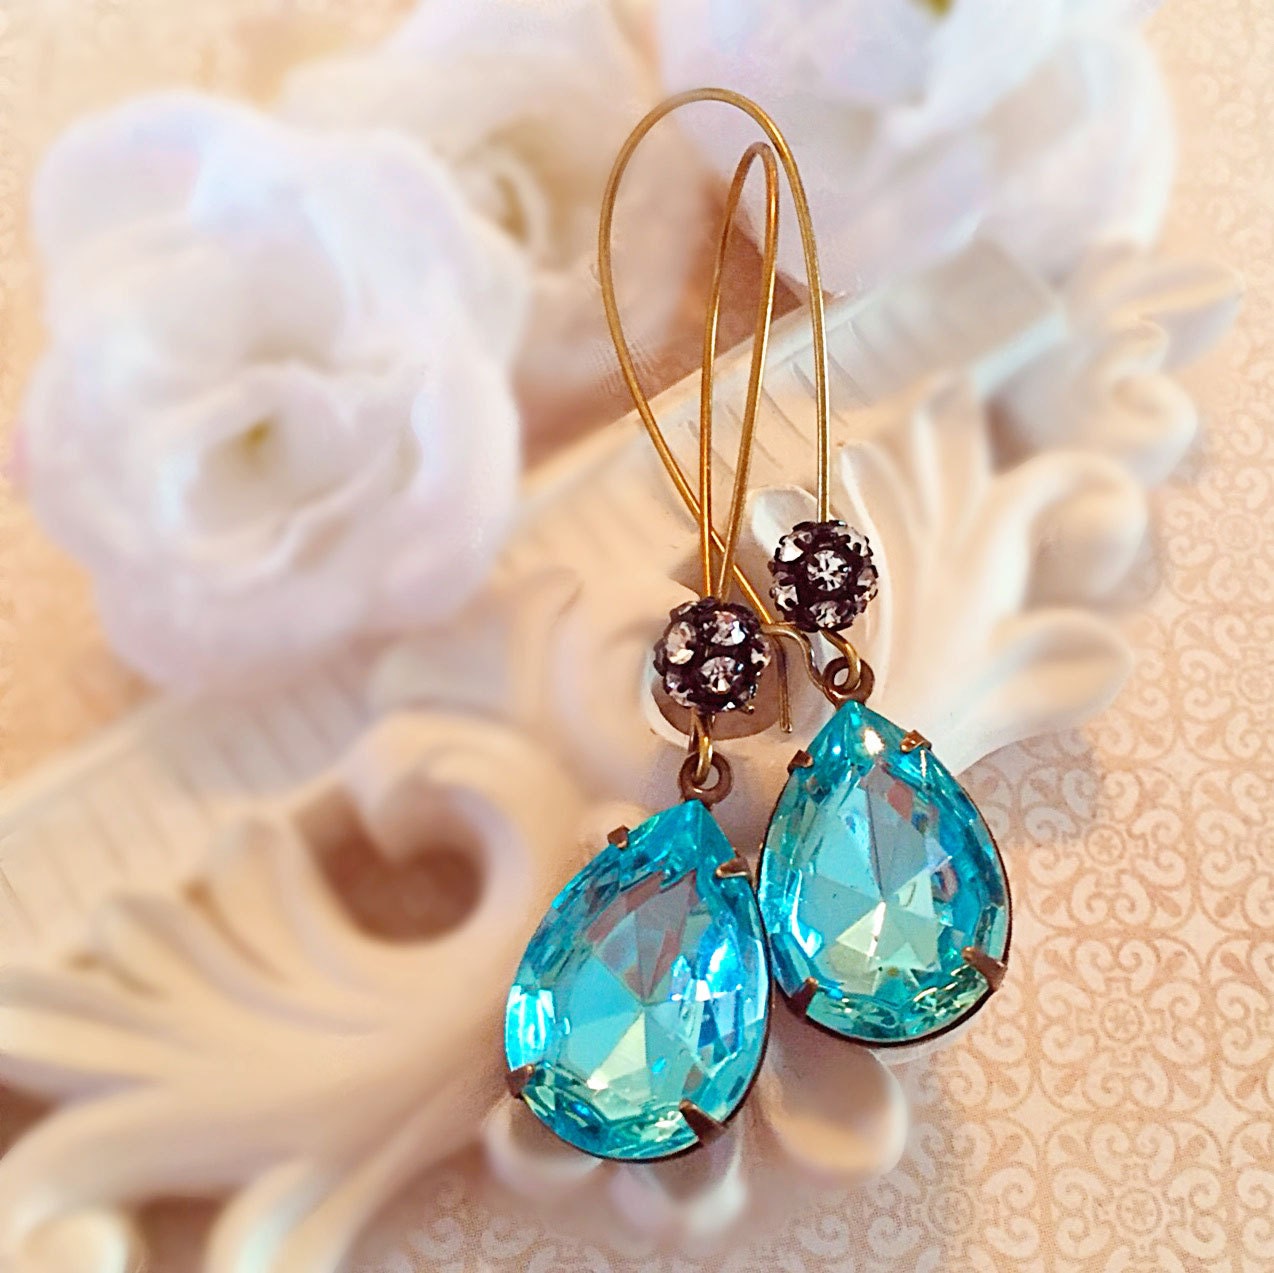 Crystal Earrings - Aqua - Bridesmaid Gift - Victorian Jewelry - COVET Aqua